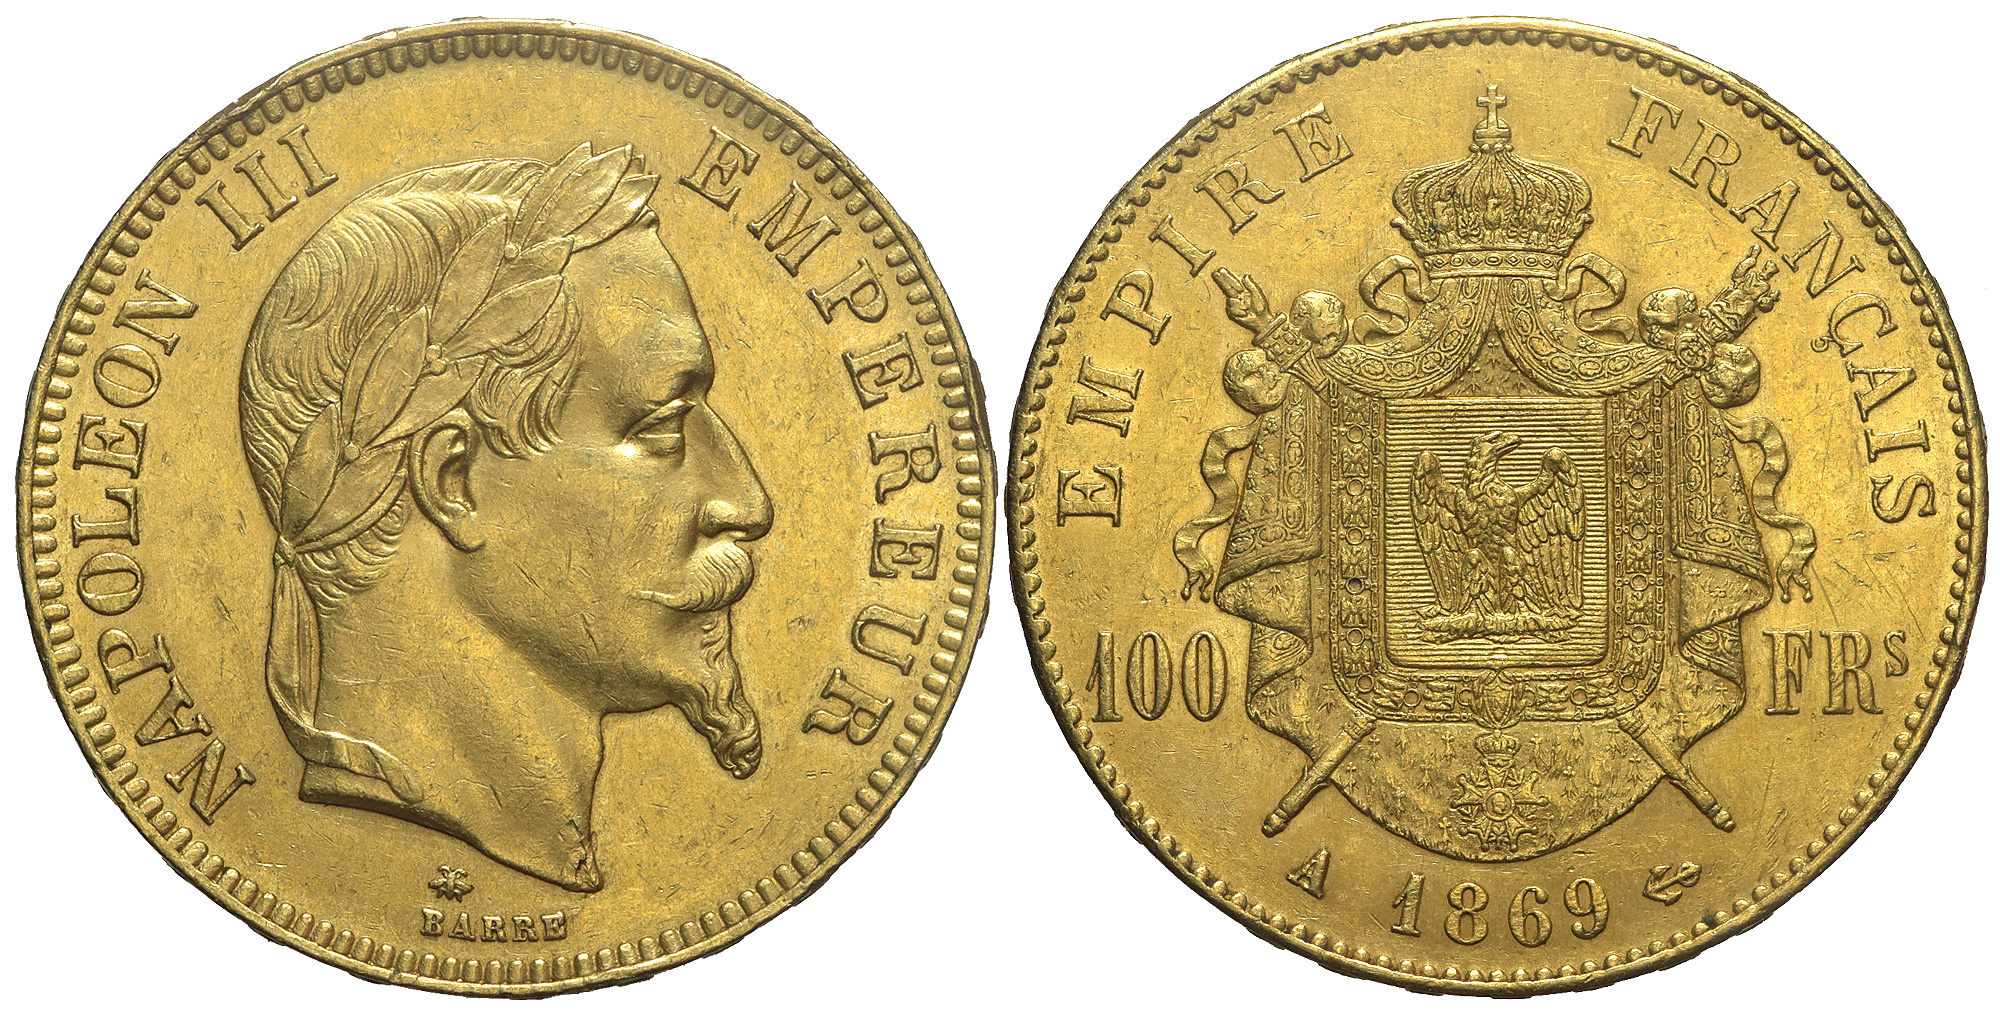 France Napoleon Francs 1869 Gold 